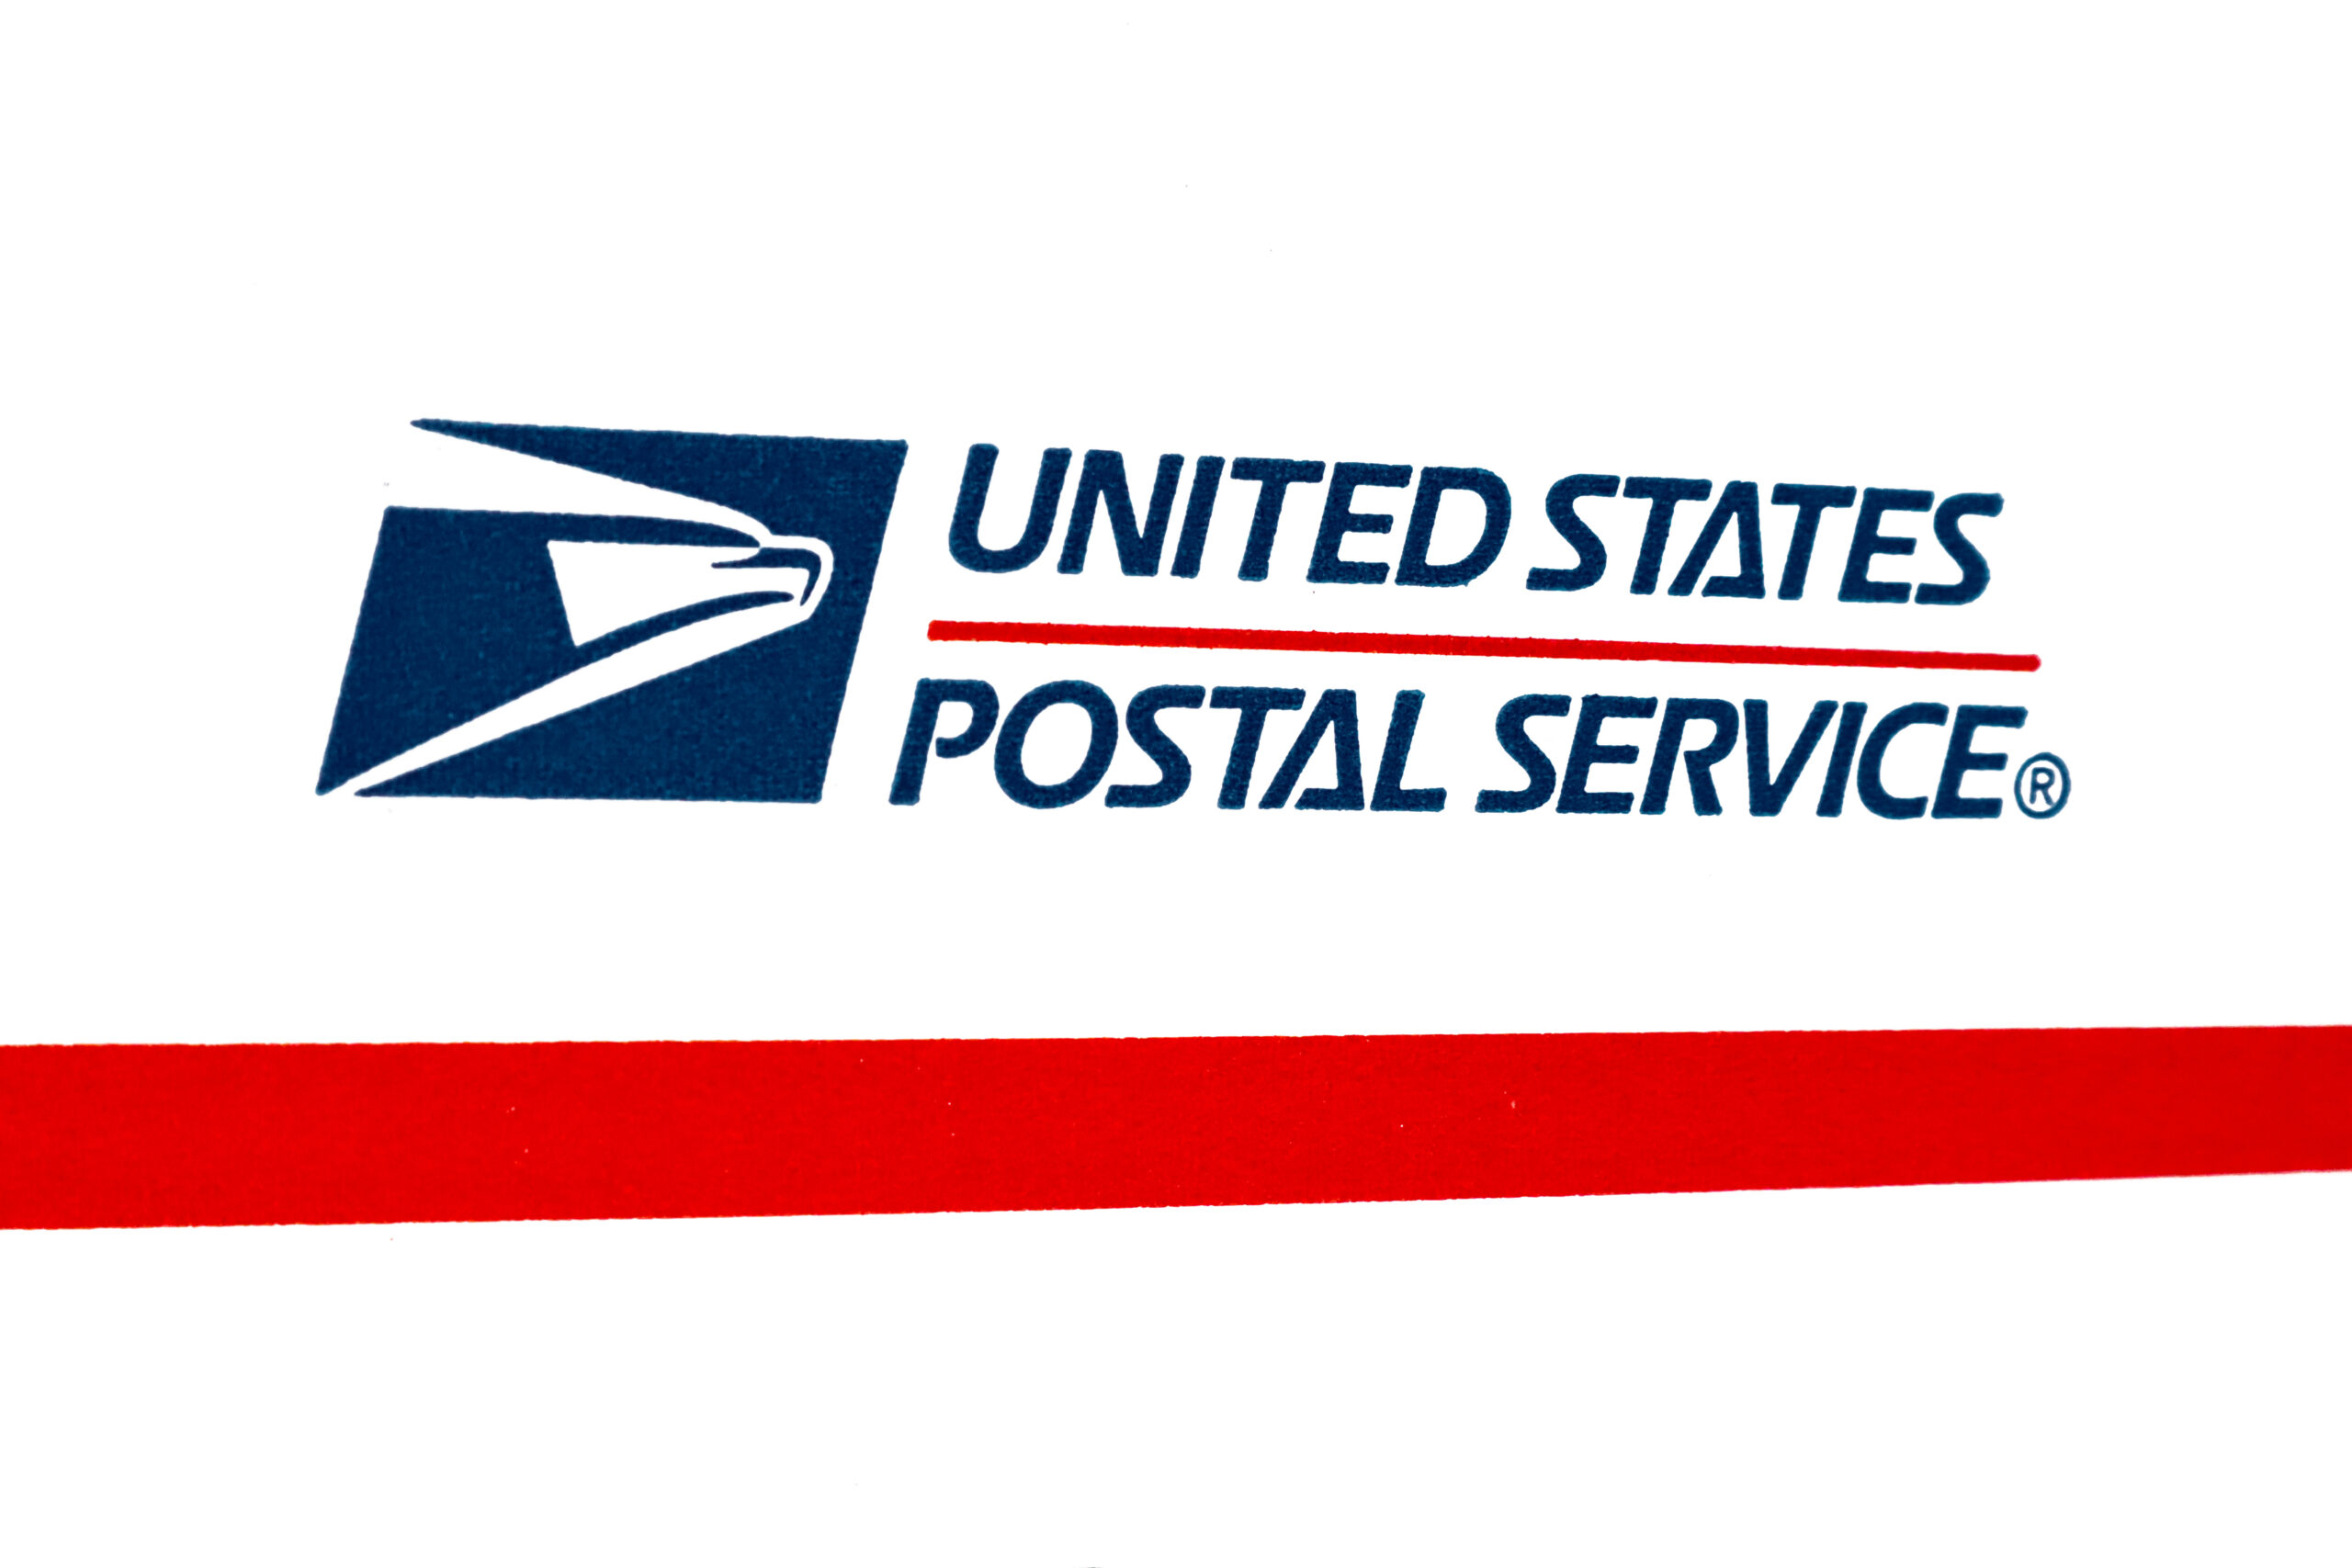 postage rates